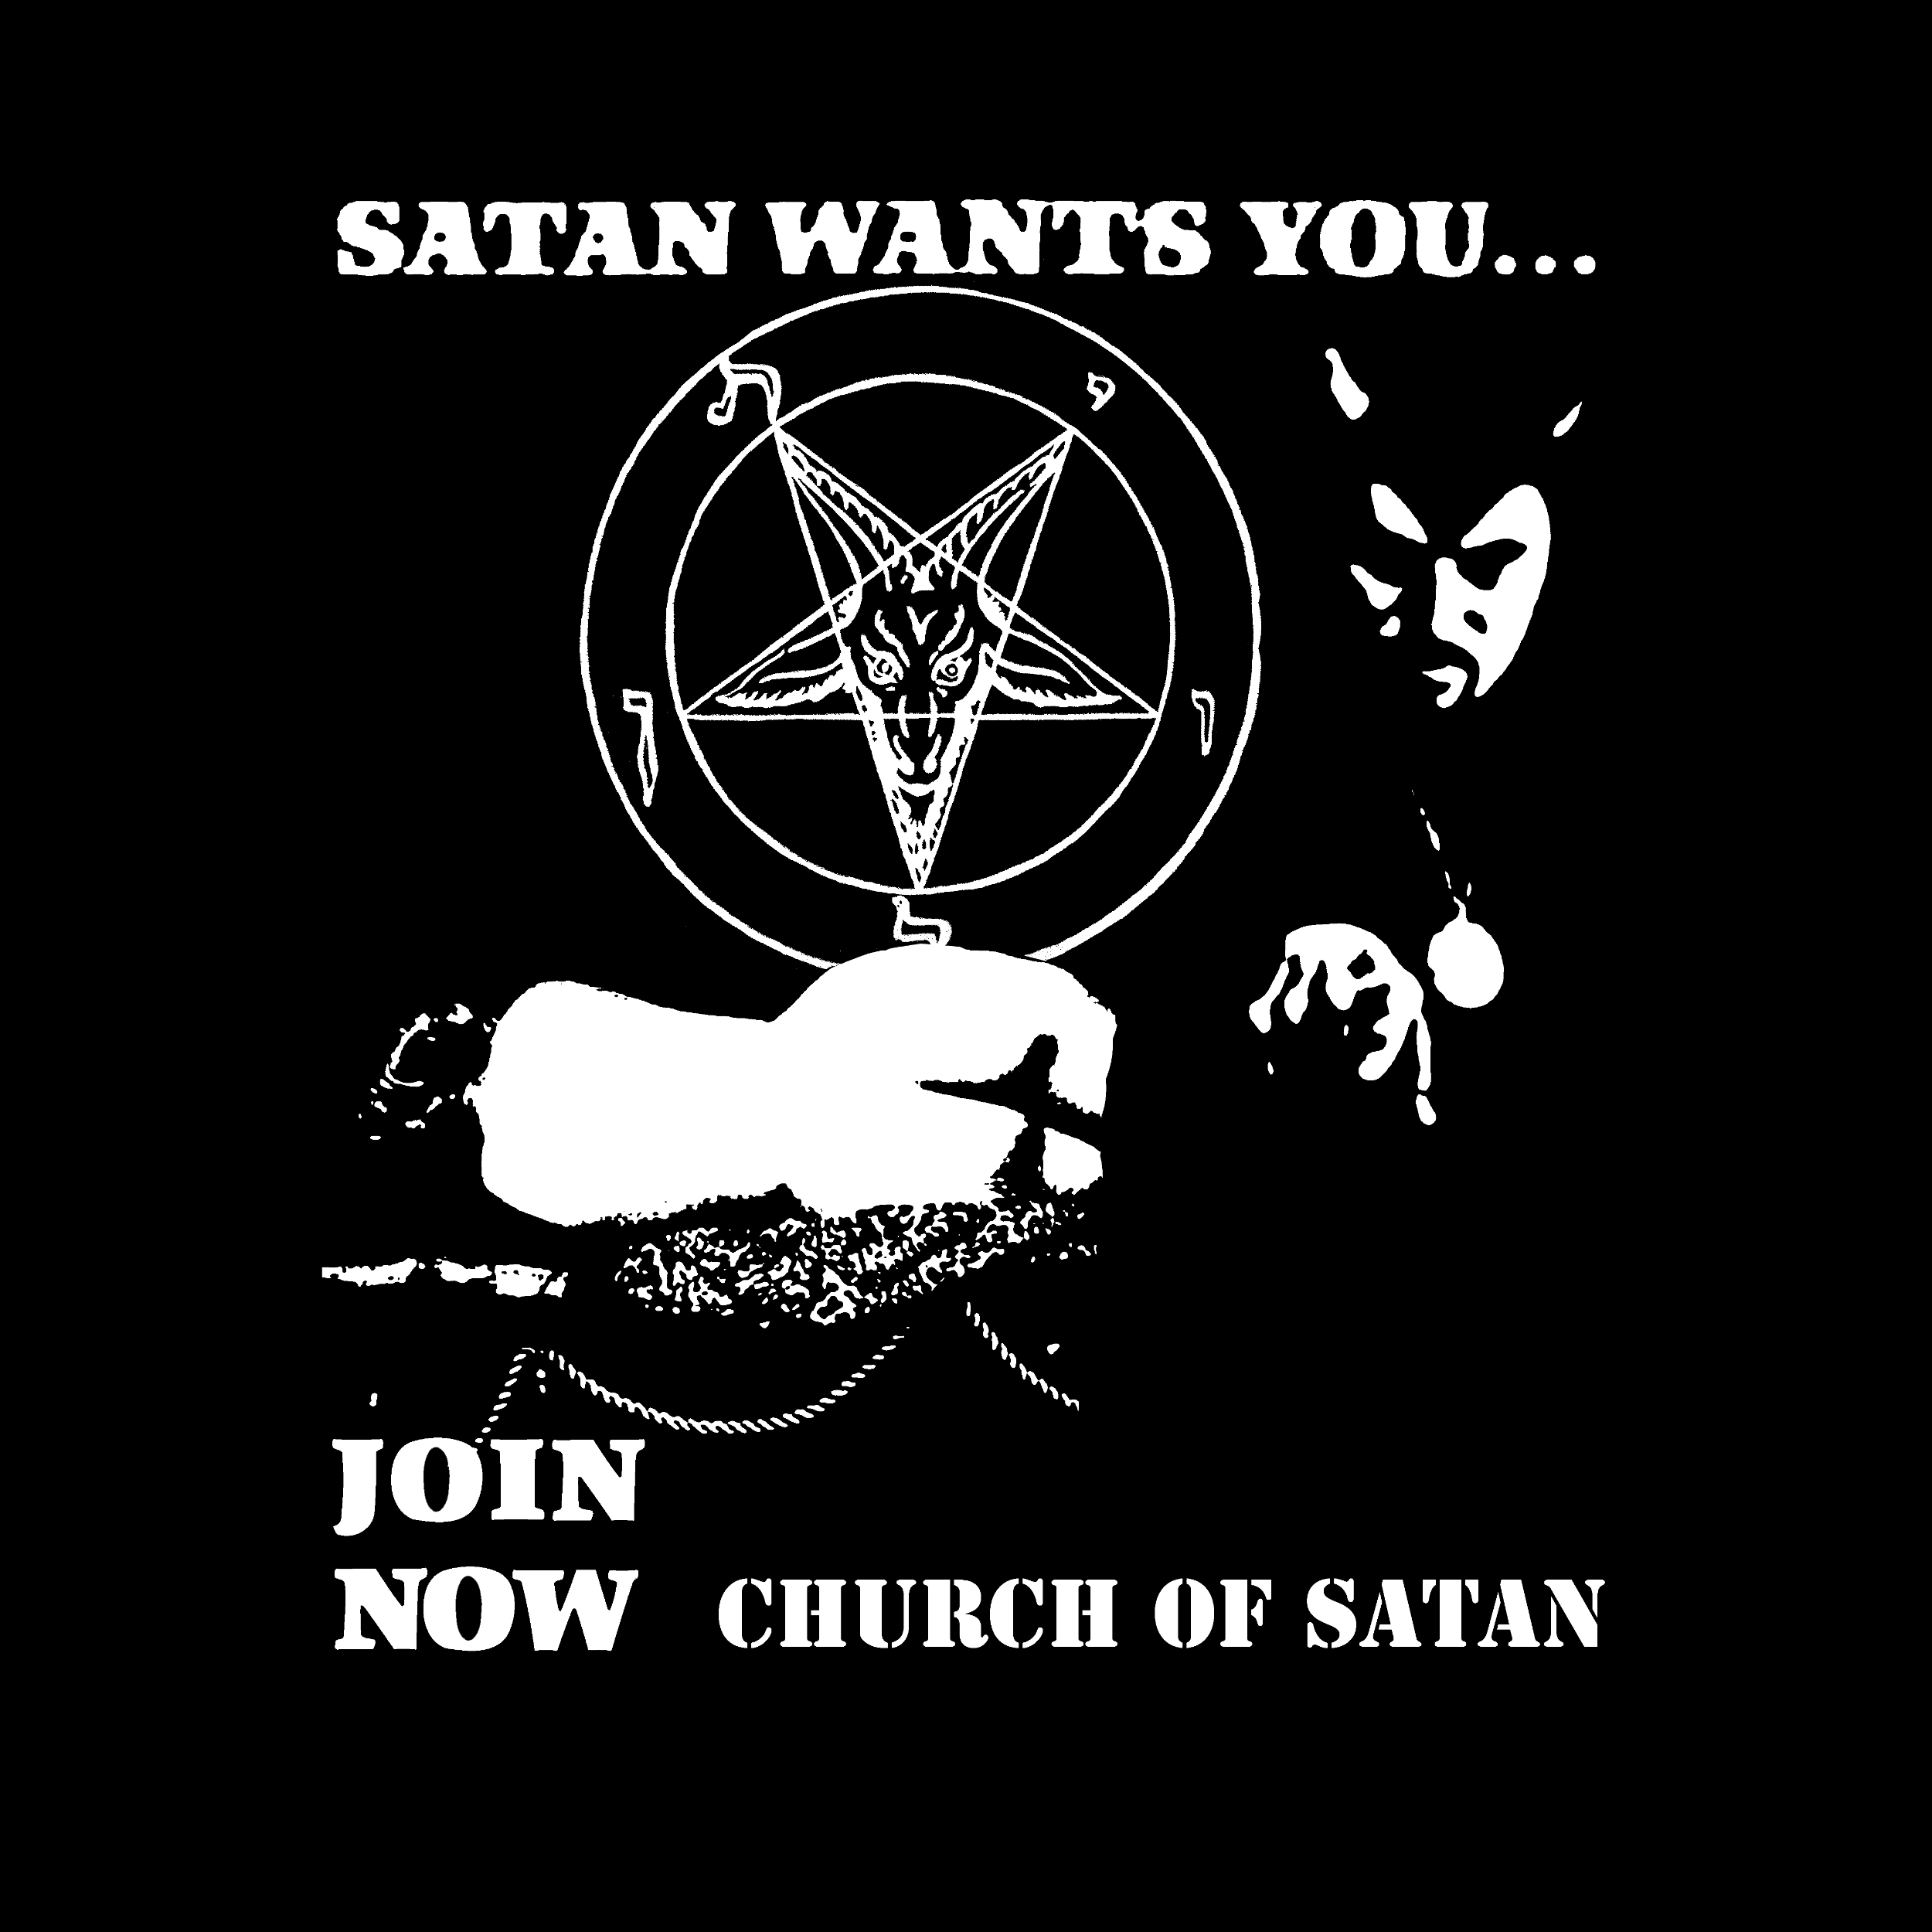 Church Of Satan Wants You Classic Tee